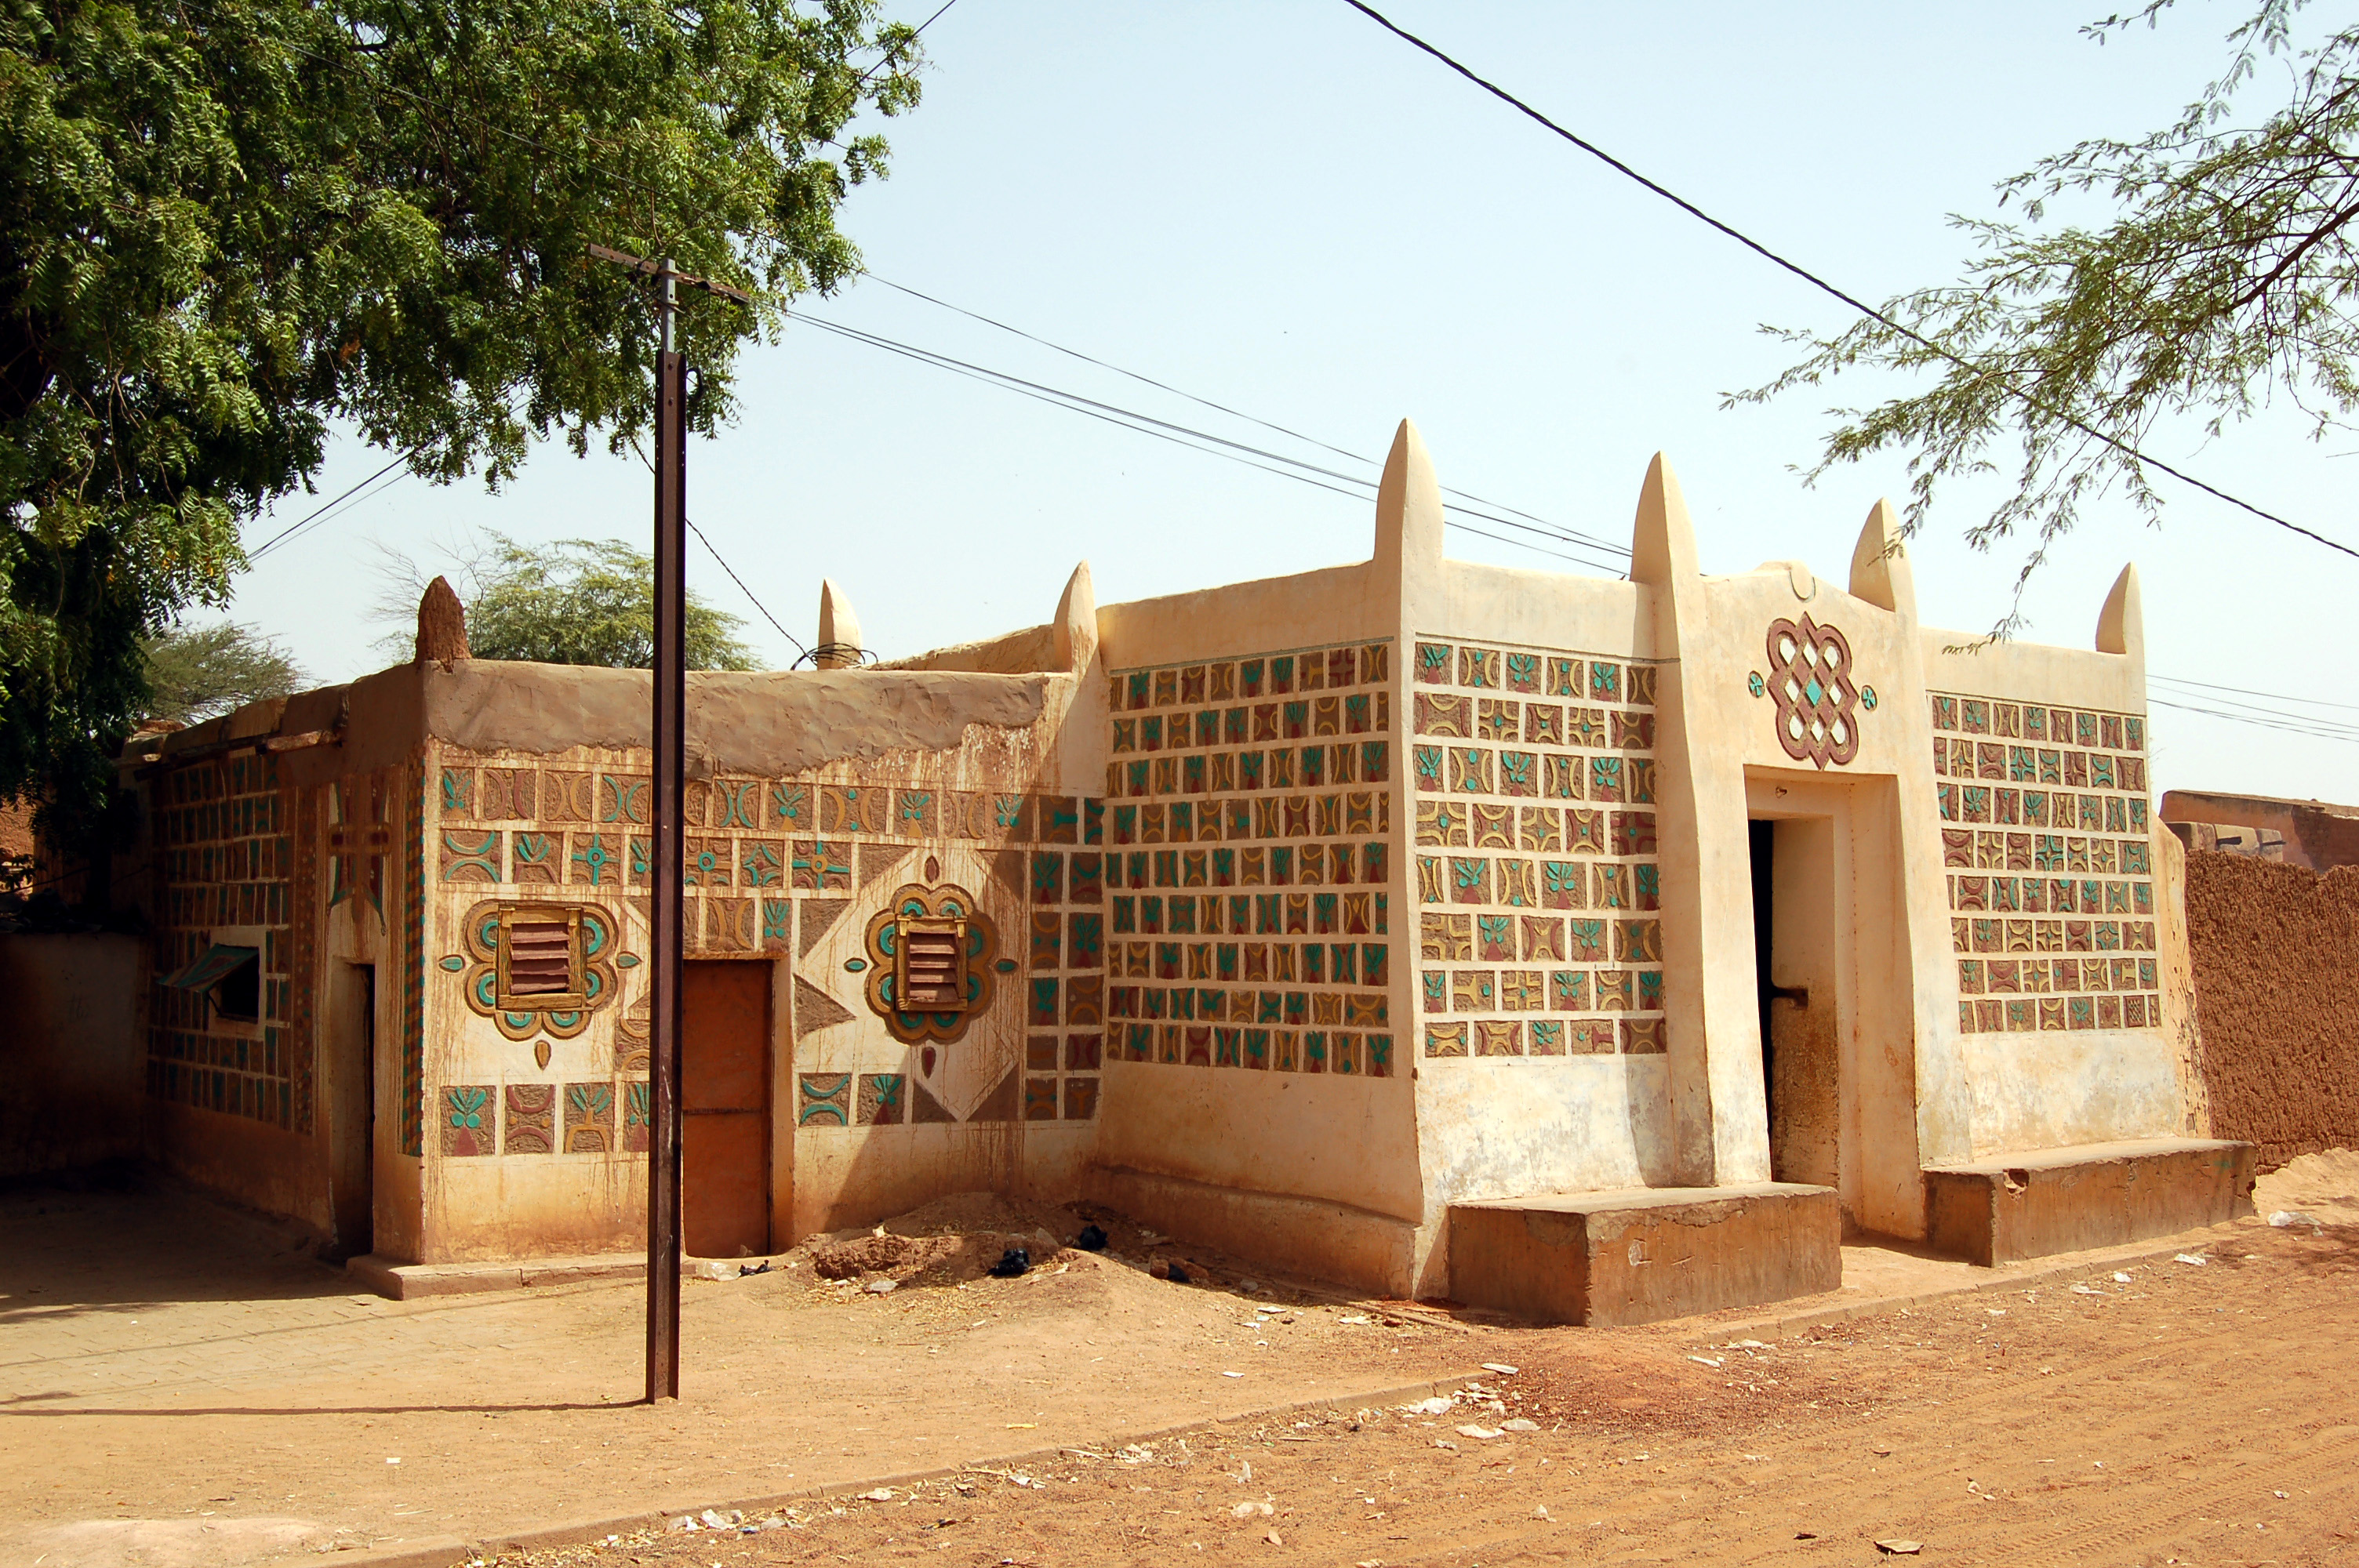 Historical building in Zinder, Niger